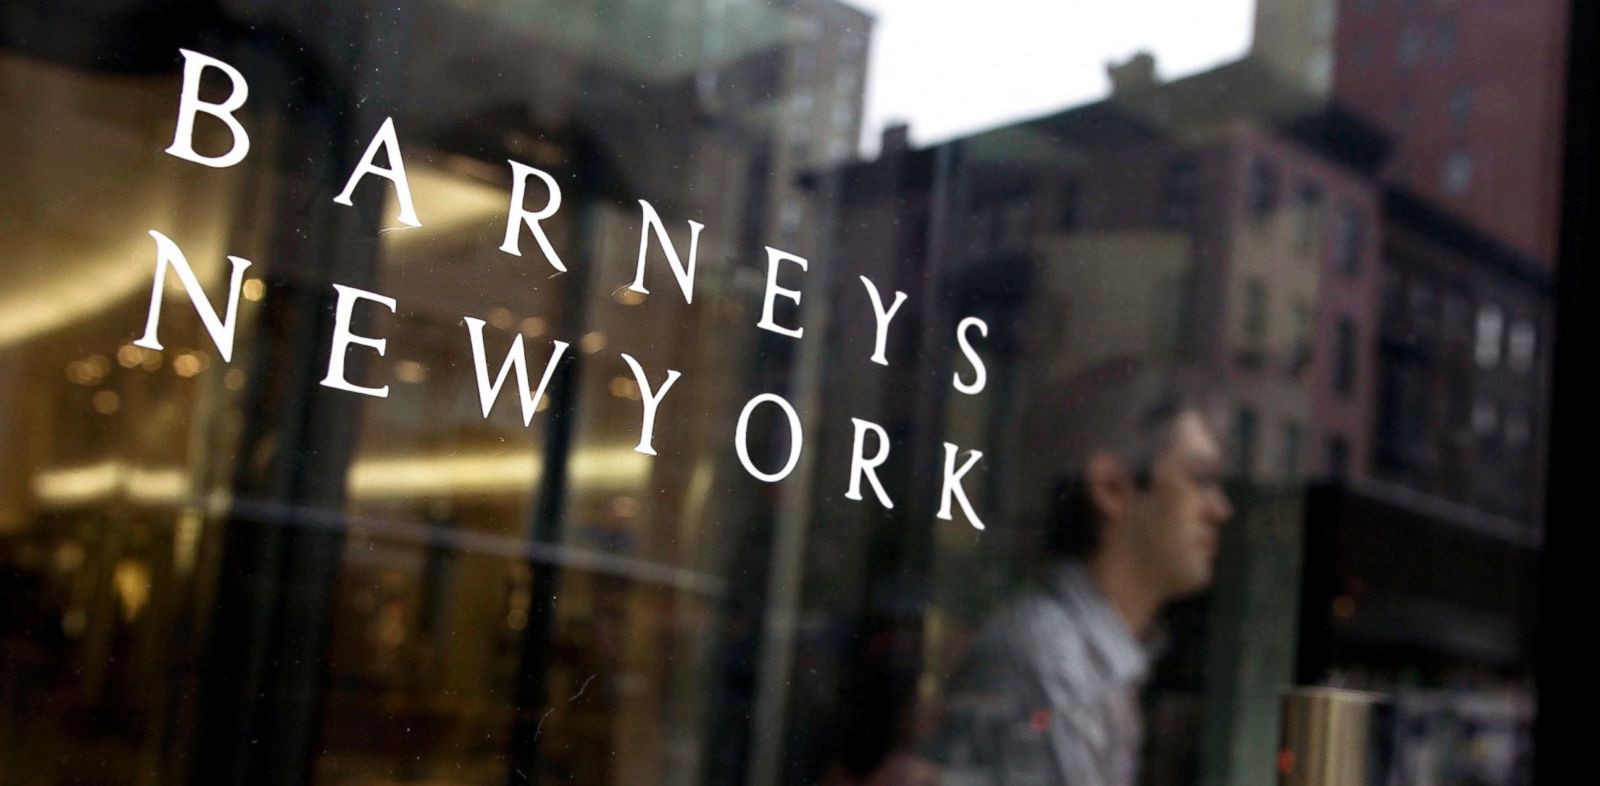 Barneys New York Complaints Increasing, Lawyer Says - ABC News